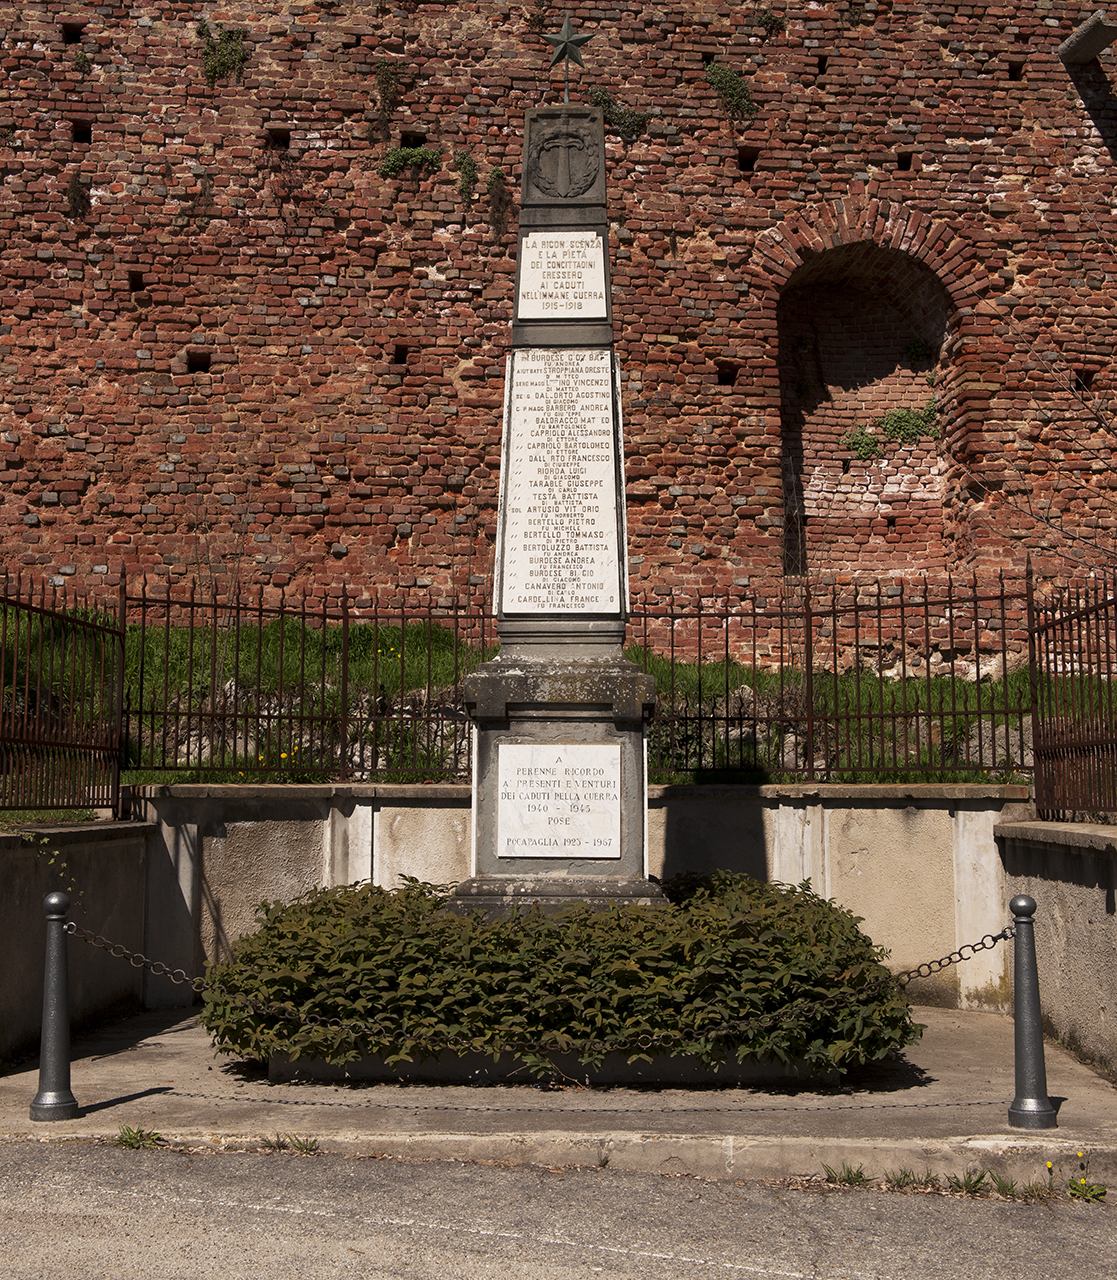 spada entro ghirlanda (monumento ai caduti - ad obelisco) - produzione piemontese (primo quarto, terzo quarto sec. XX, sec. XX)